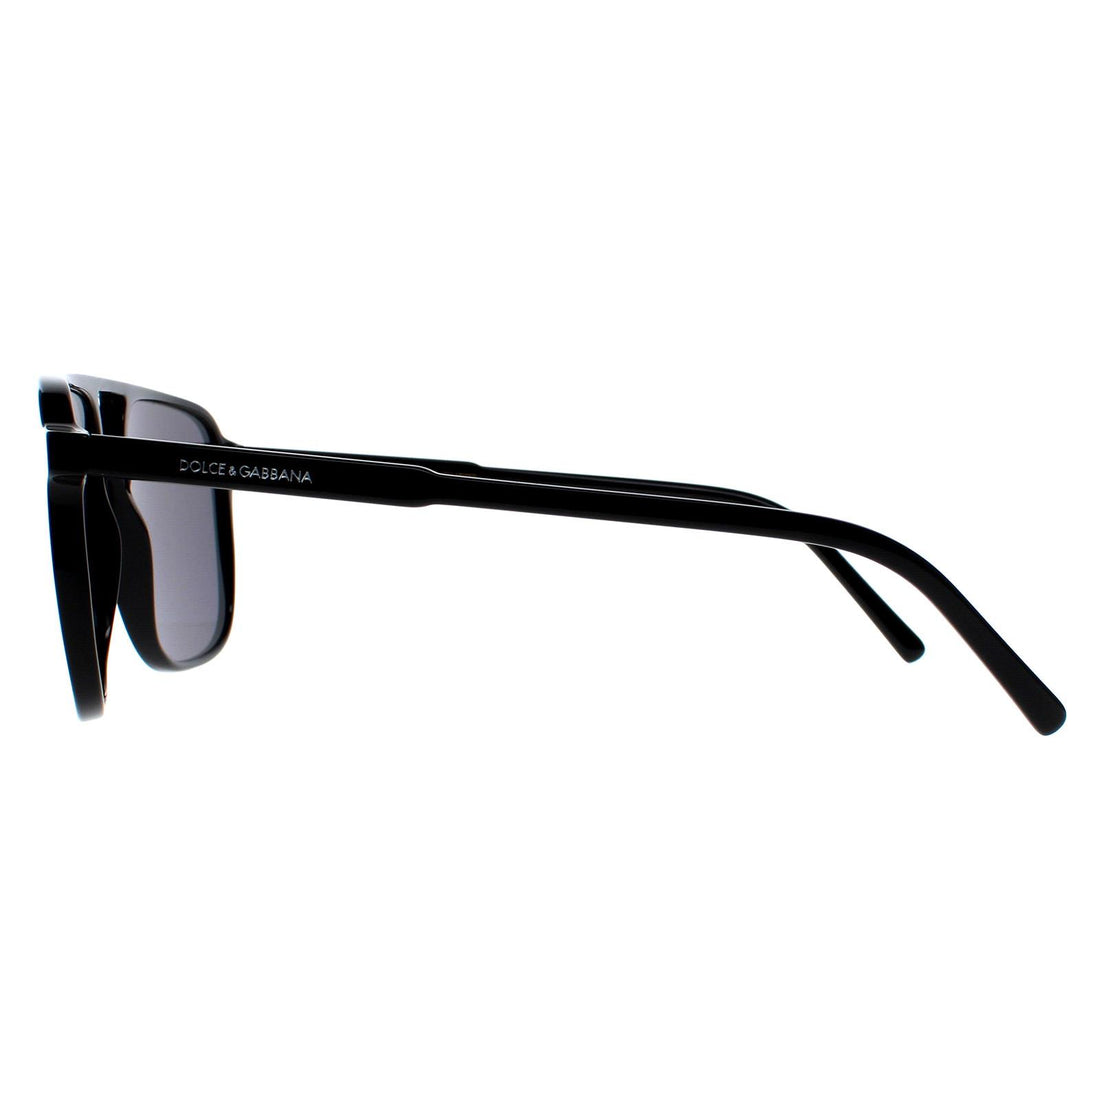 Dolce & Gabbana Sunglasses DG4423 501/81 Black Grey Polarized